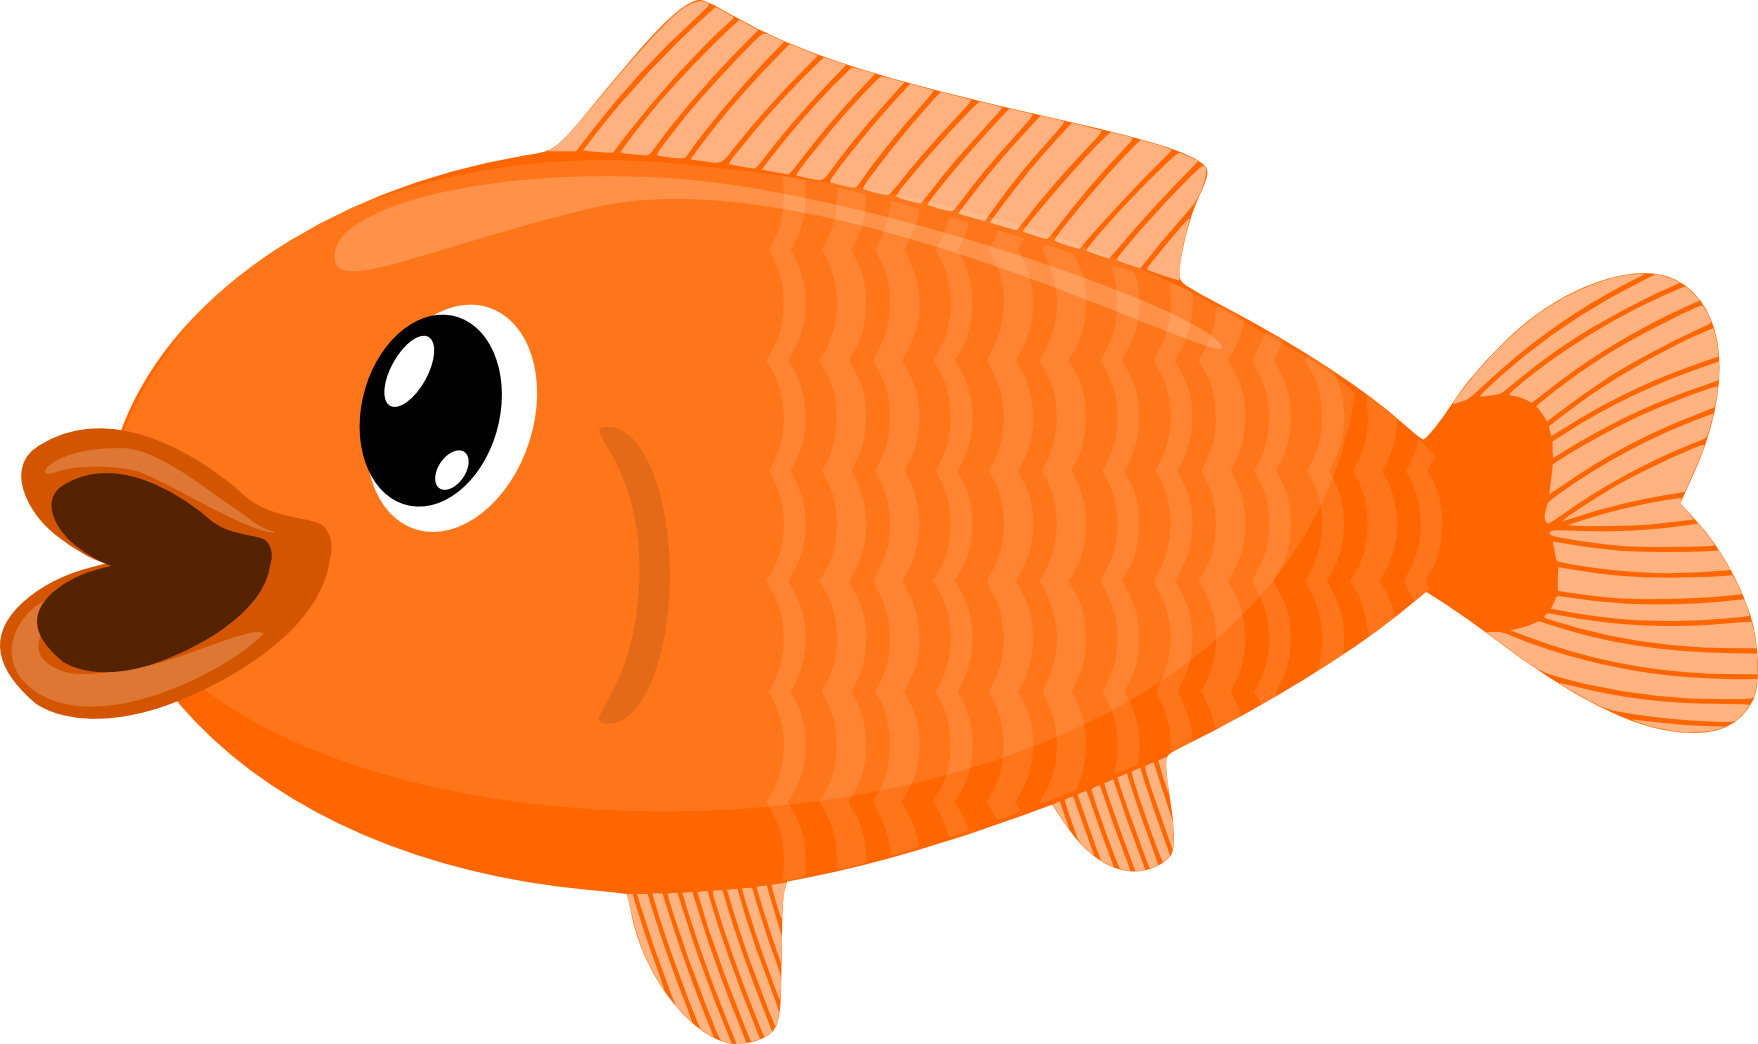 goldfish clipart png